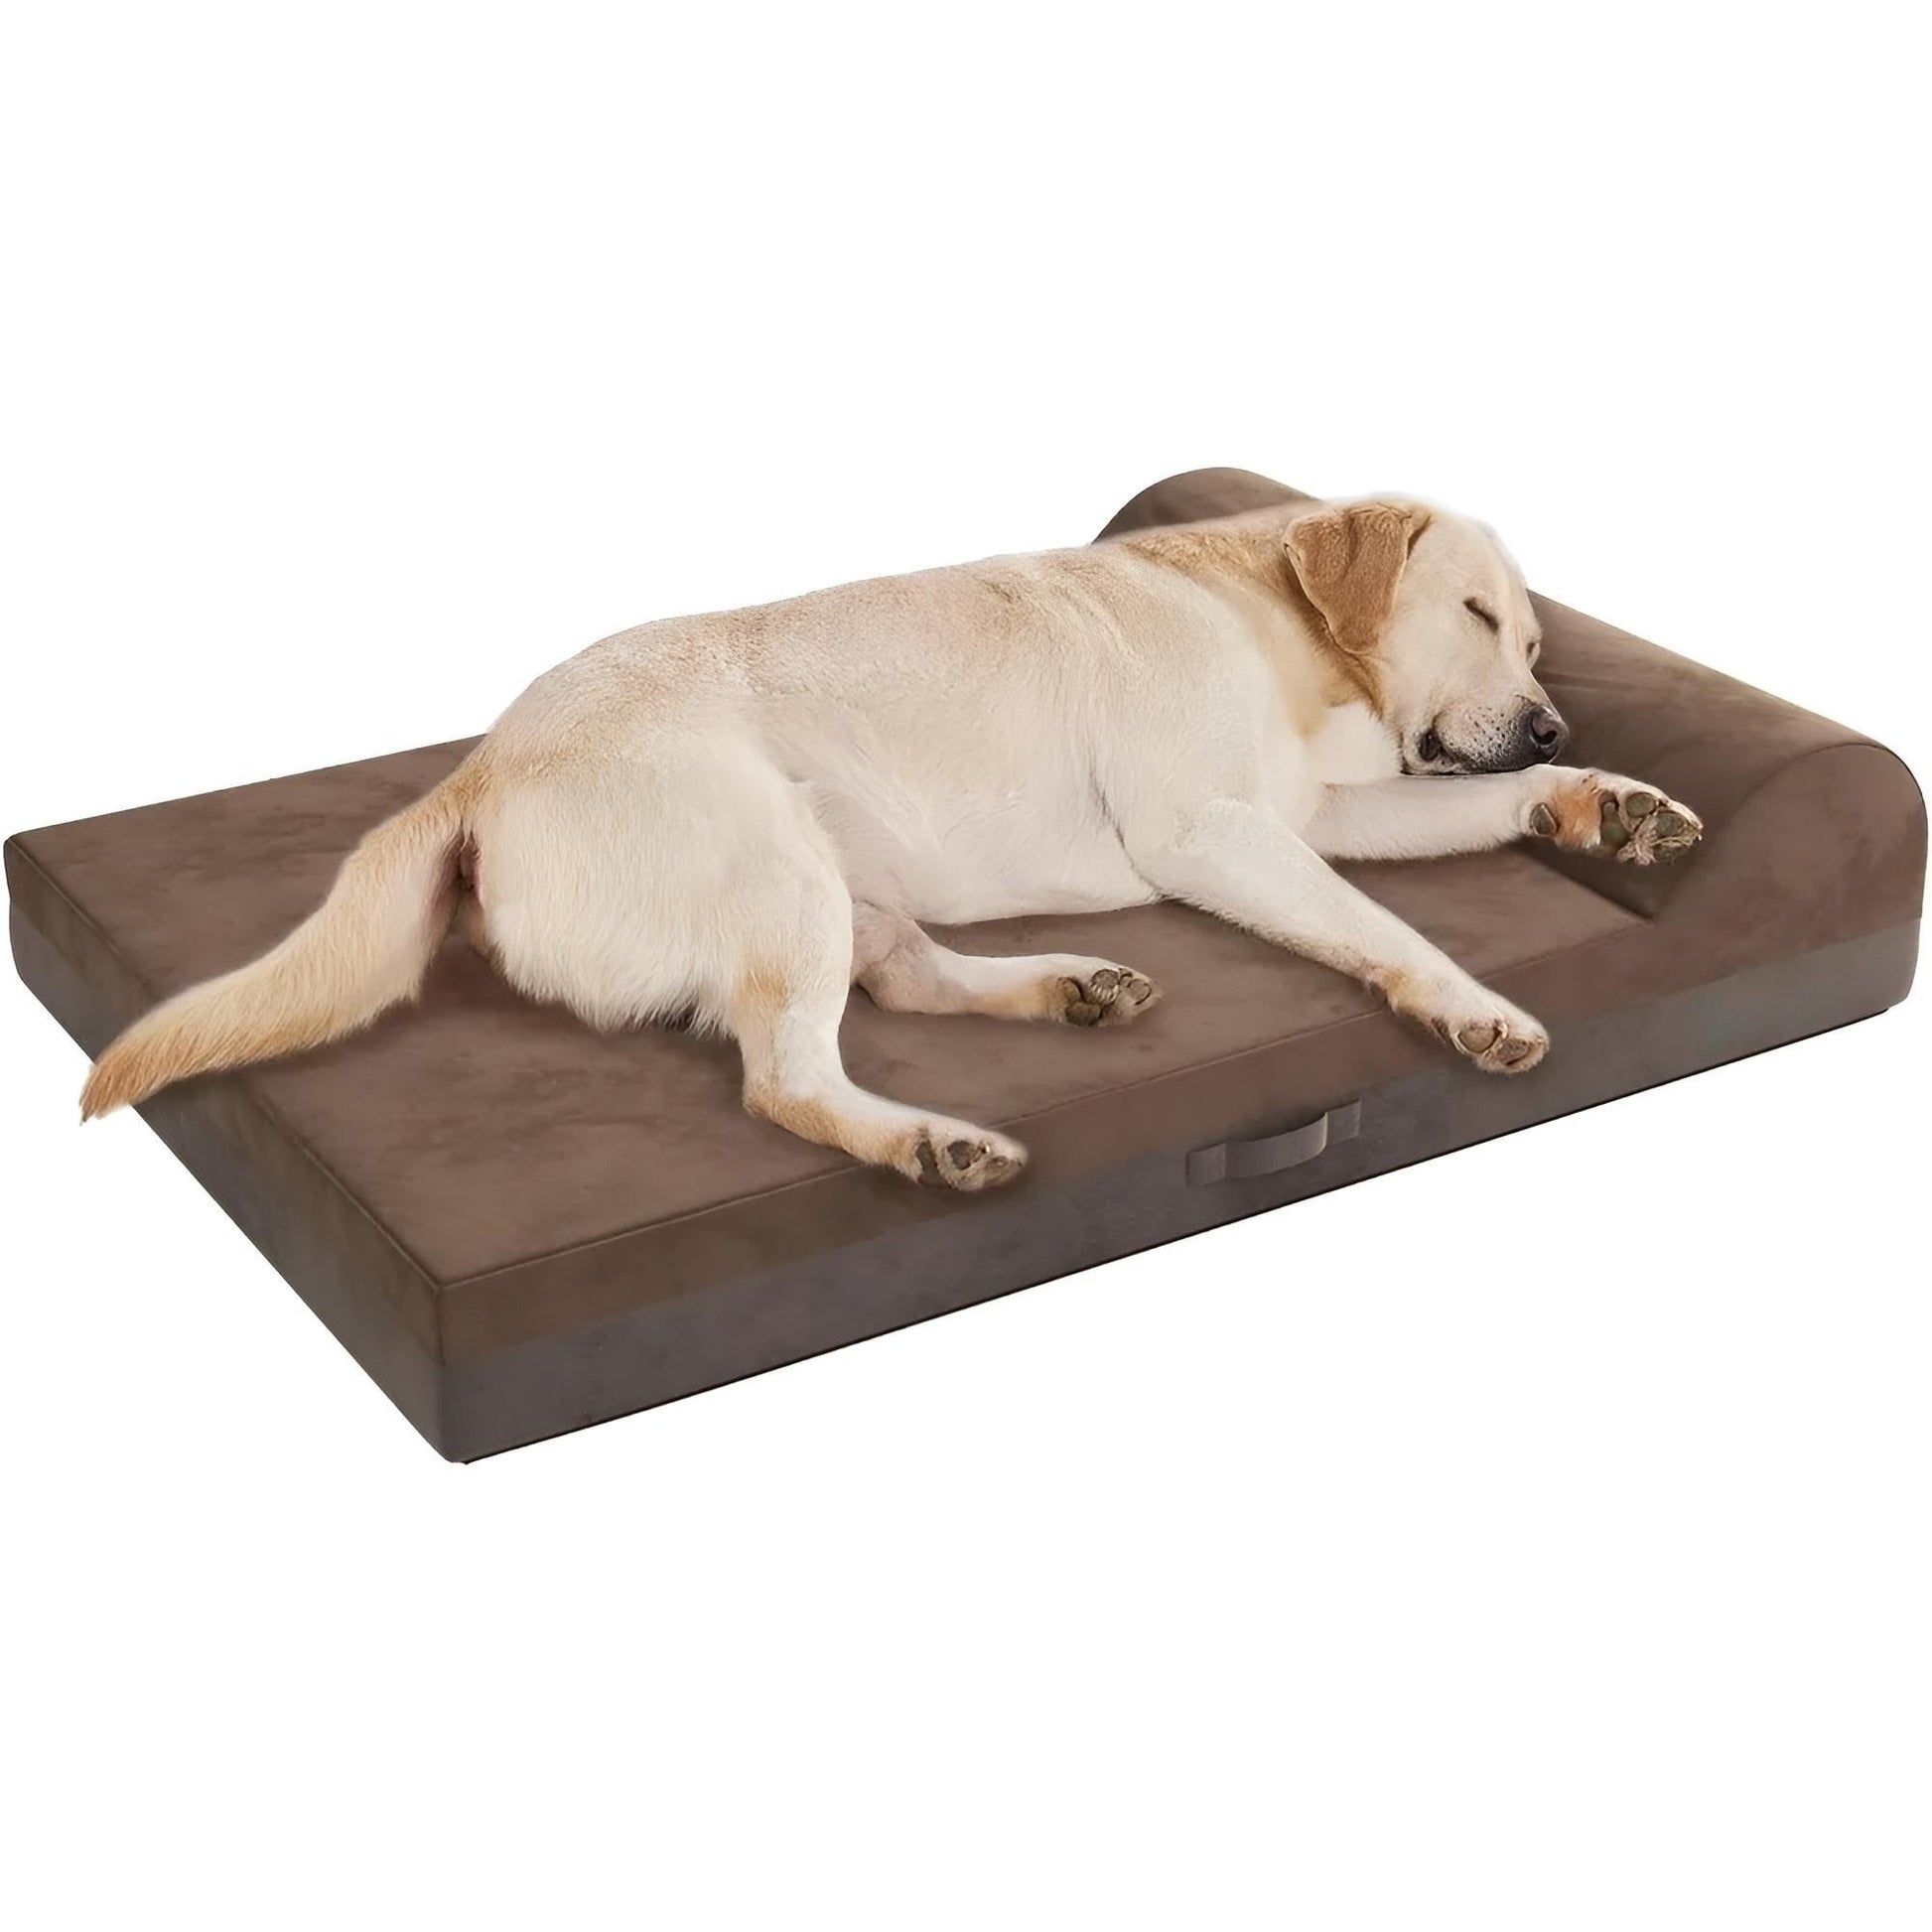 7 in thick jumbo dog bed orthopedic